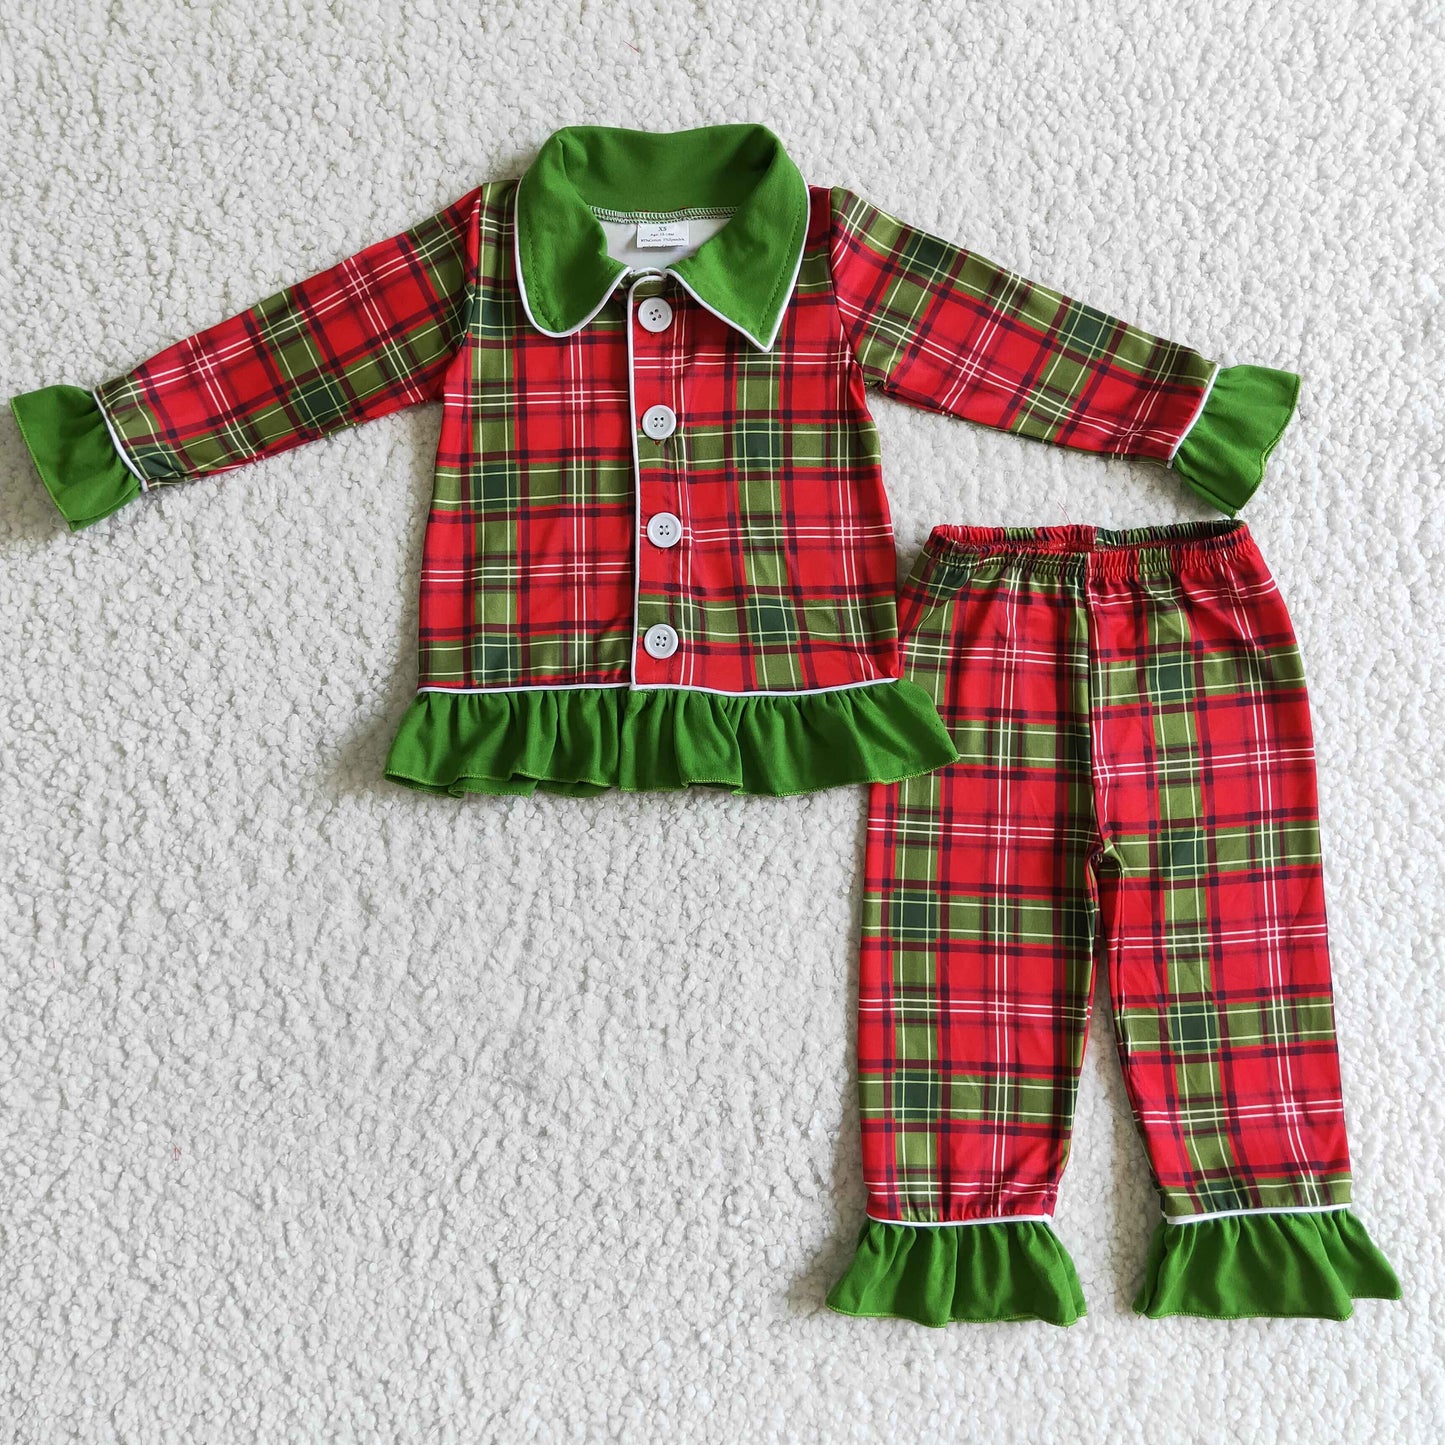 Red and green plaid sleepwear girls Christmas pajamas